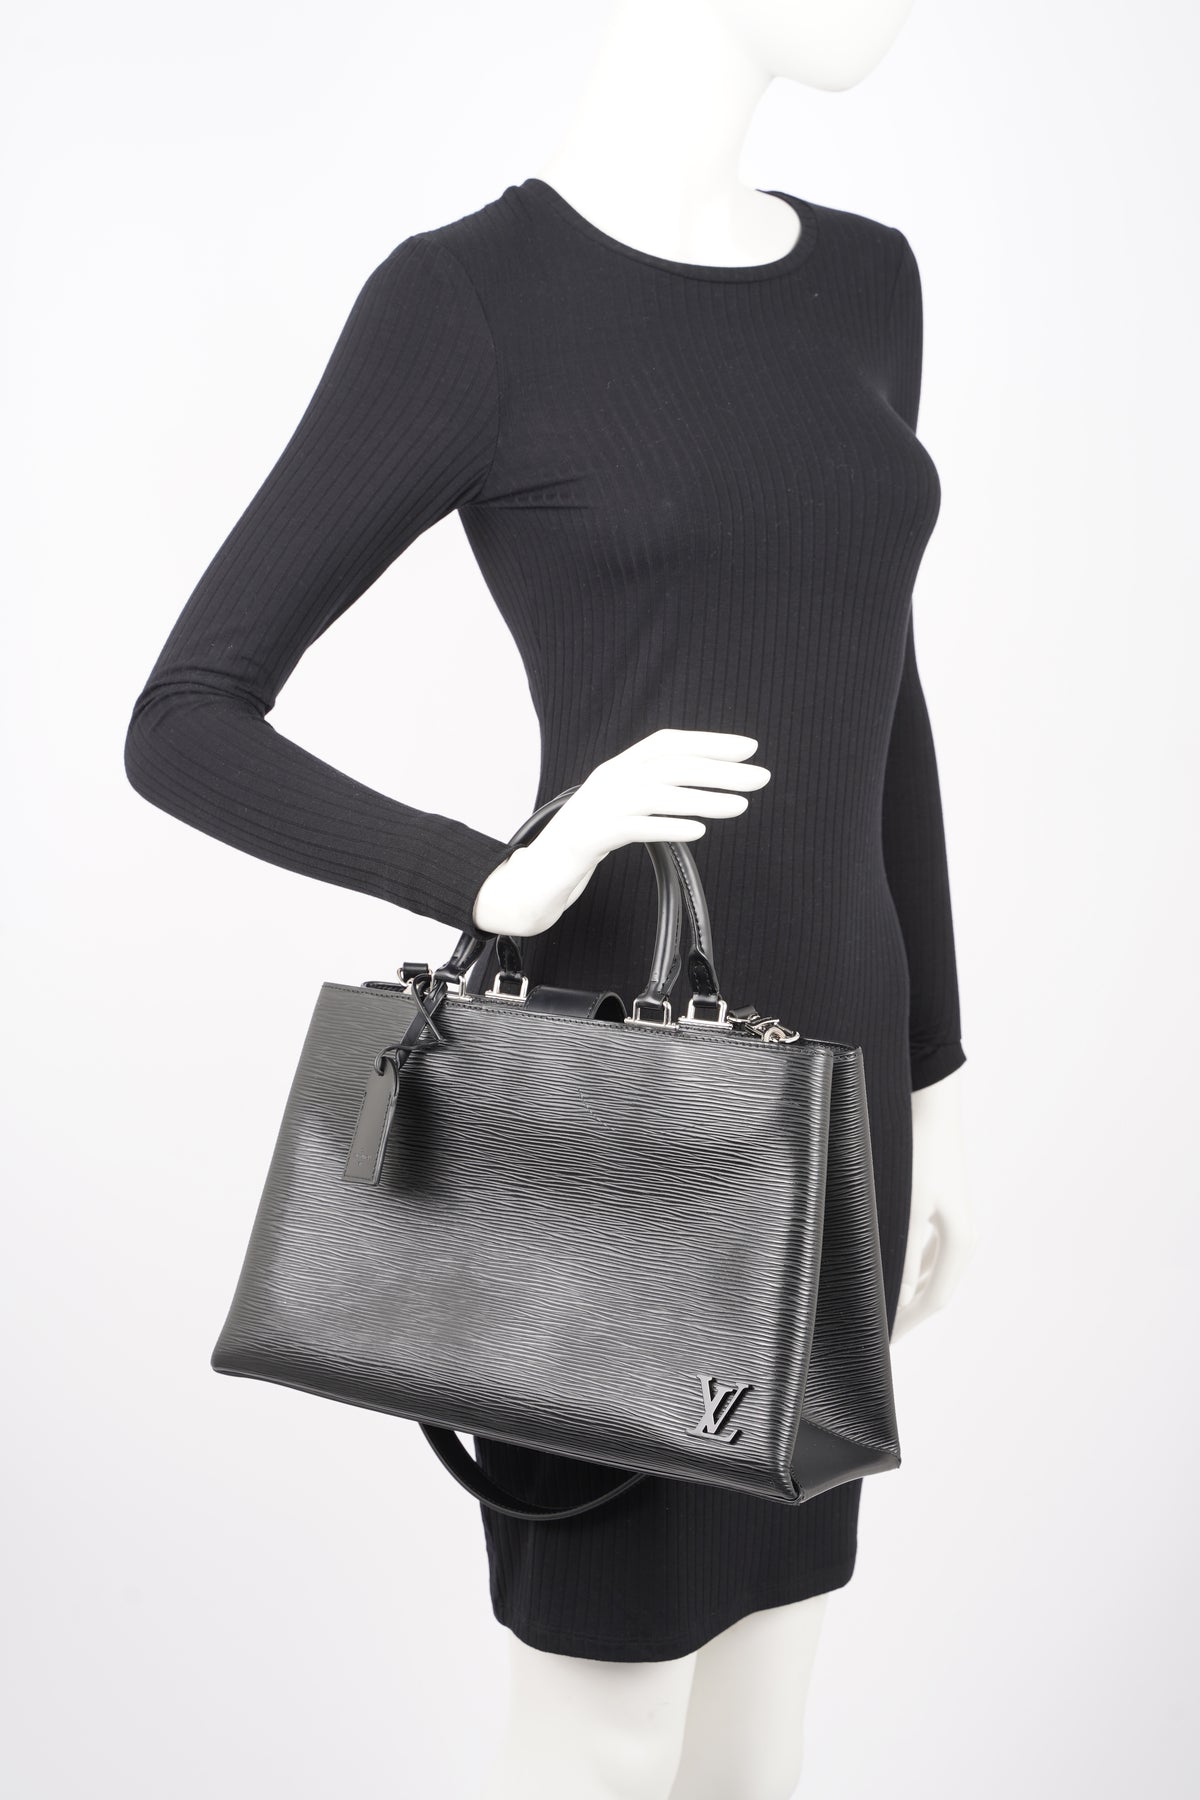 Louis Vuitton EPI Leather Kleber Bag